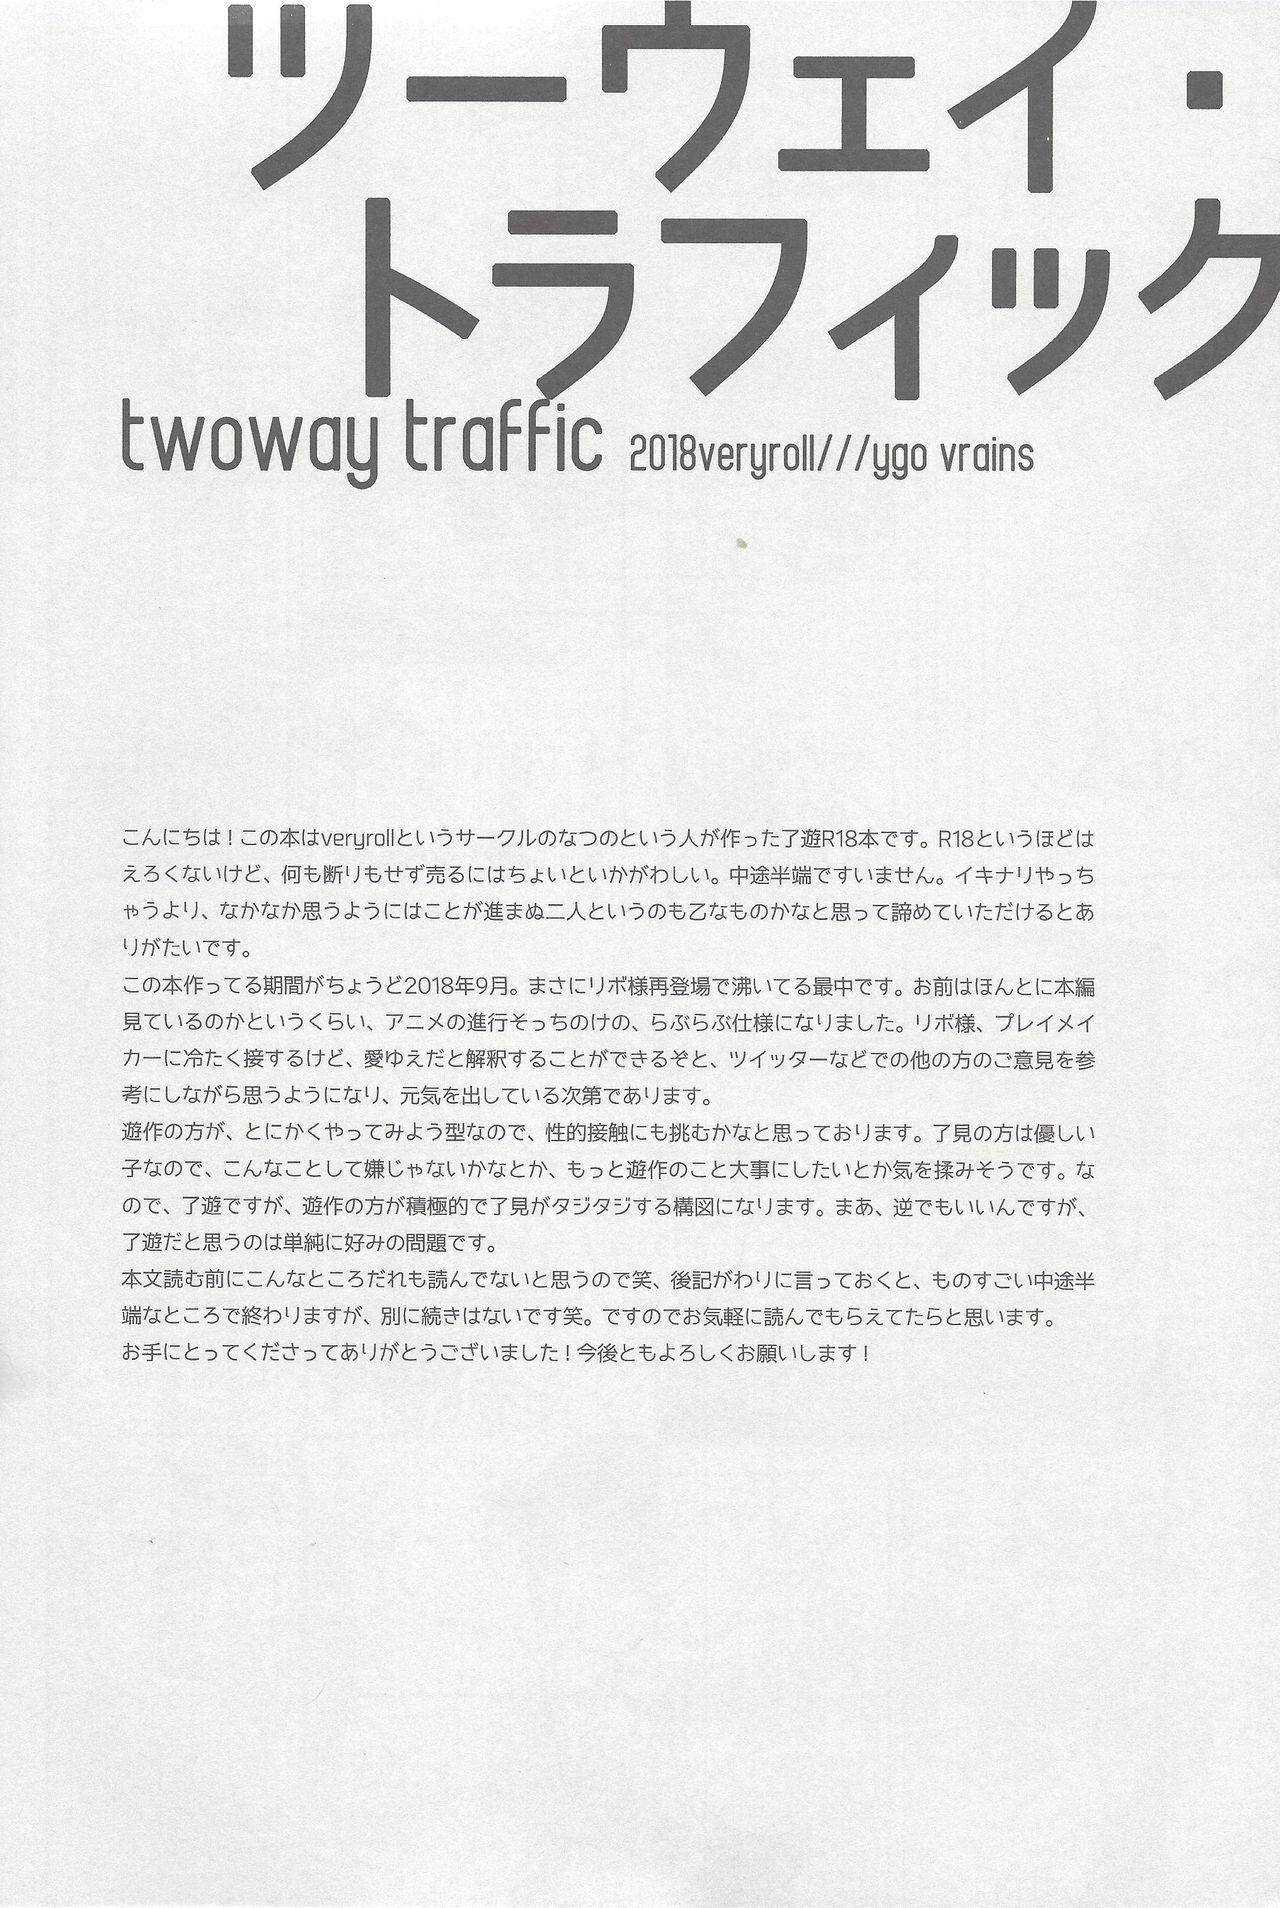 Foda twoway traffic - Yu-gi-oh vrains Cdmx - Page 2